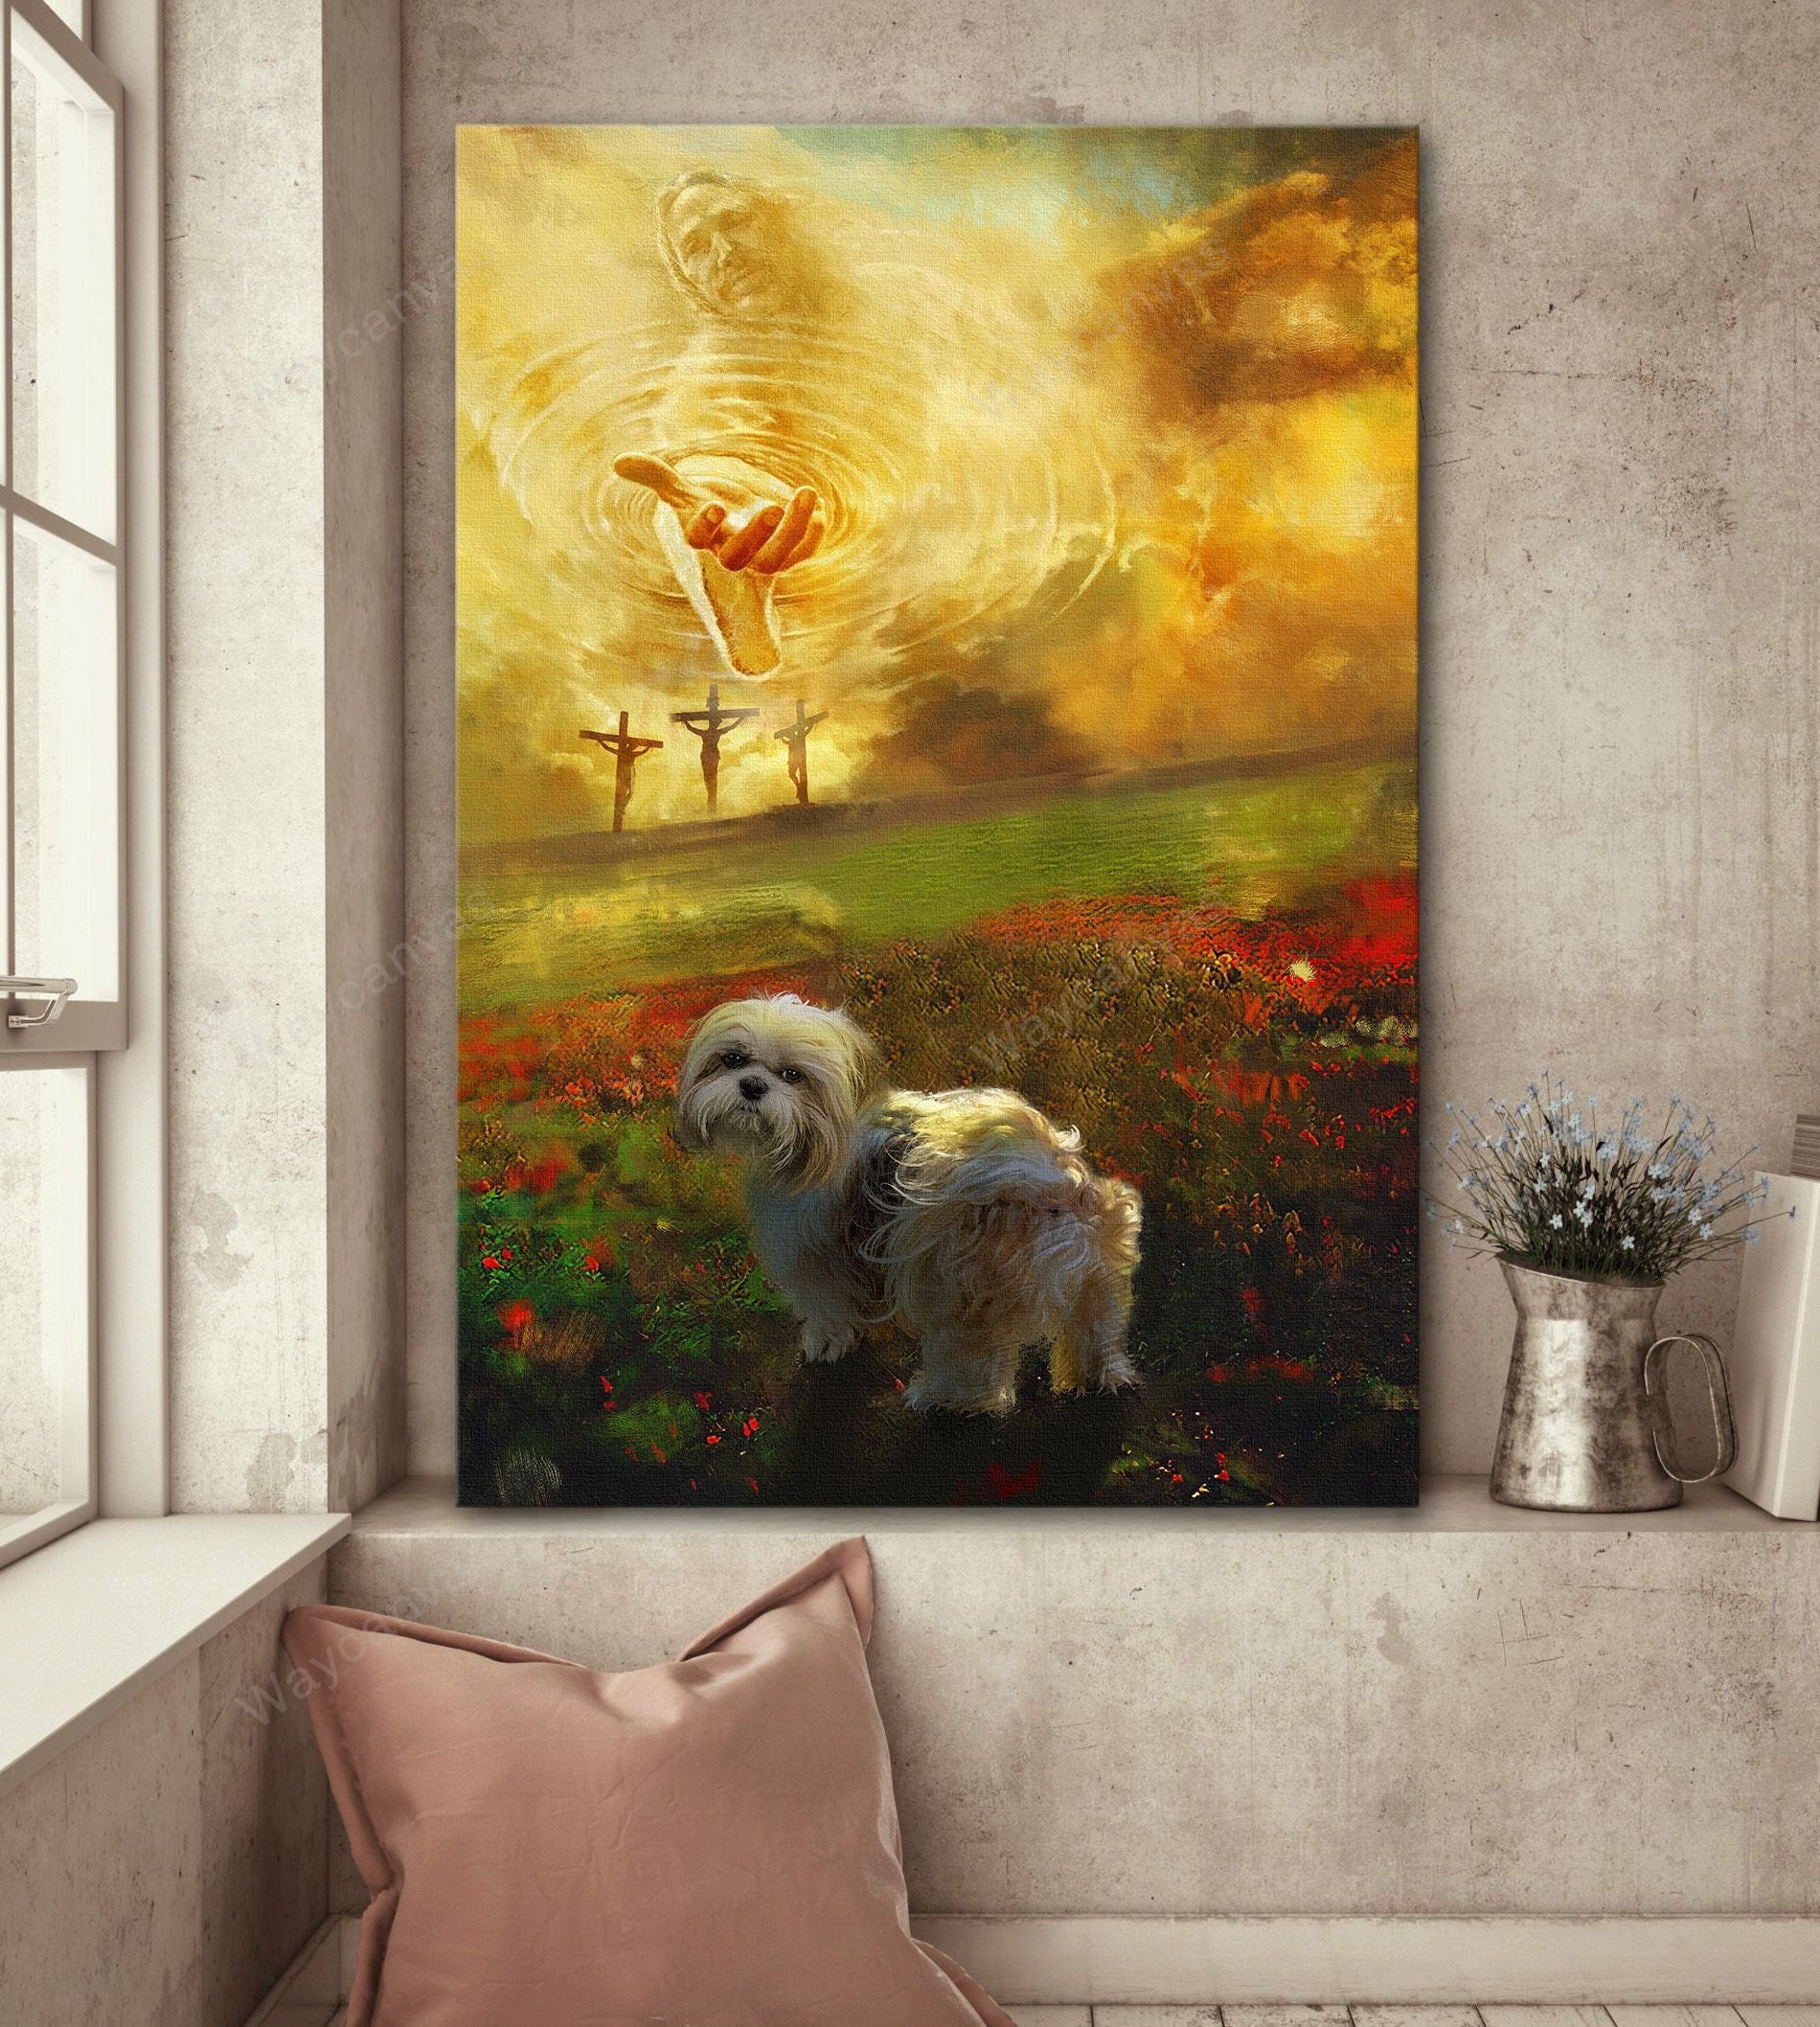 Jesus Painting, Shih Tzu, Flower field, To the beautiful world - Dog Portrait Canvas Prints, Wall Art